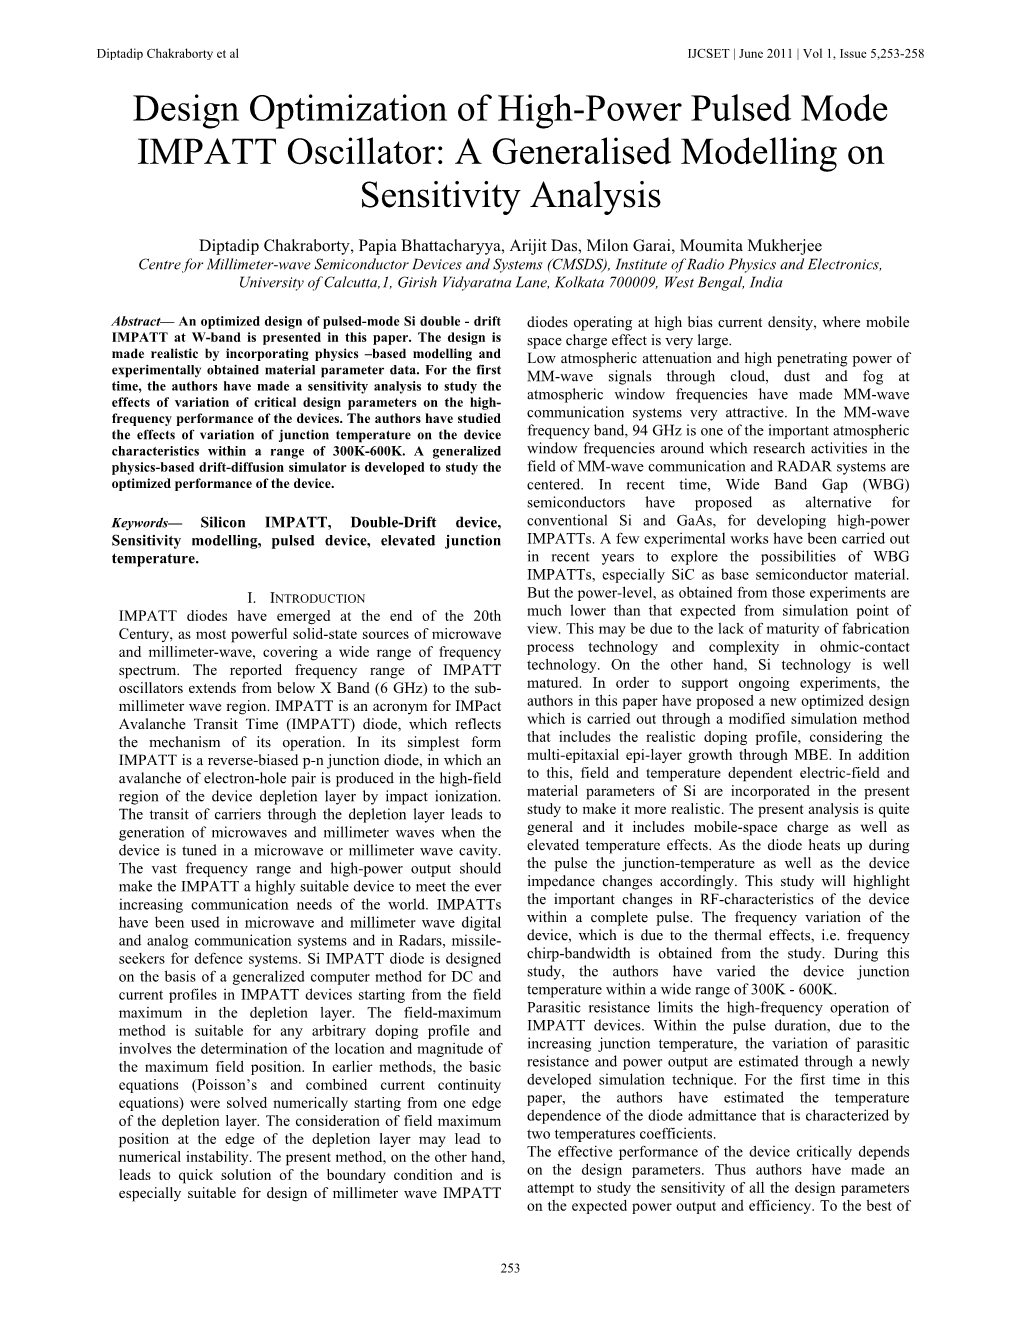 Design Optimization of High-Power Pulsed Mode IMPATT Oscillator: a Generalised Modelling on Sensitivity Analysis